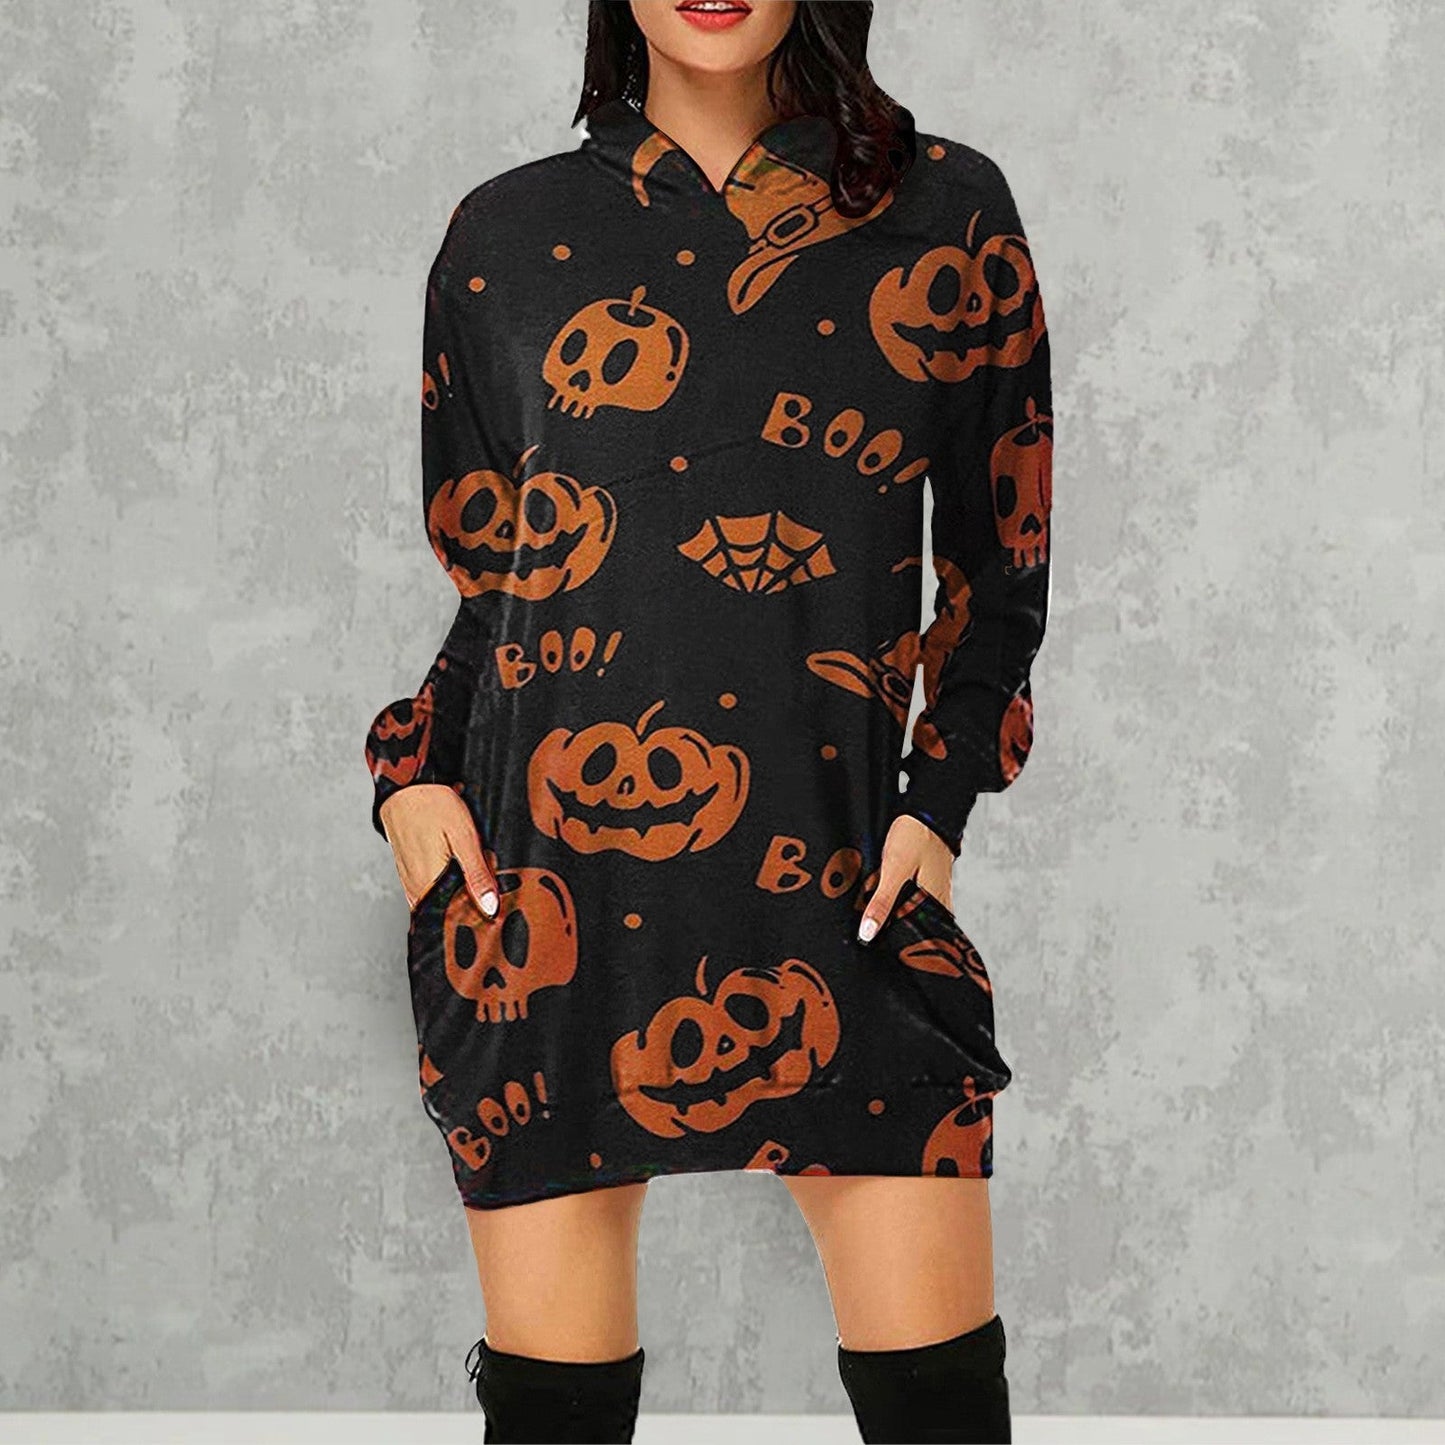 Halloween Pumpkin Design Long Sleeves Hoodies for Women-Black Pumpkin-S-Free Shipping at meselling99